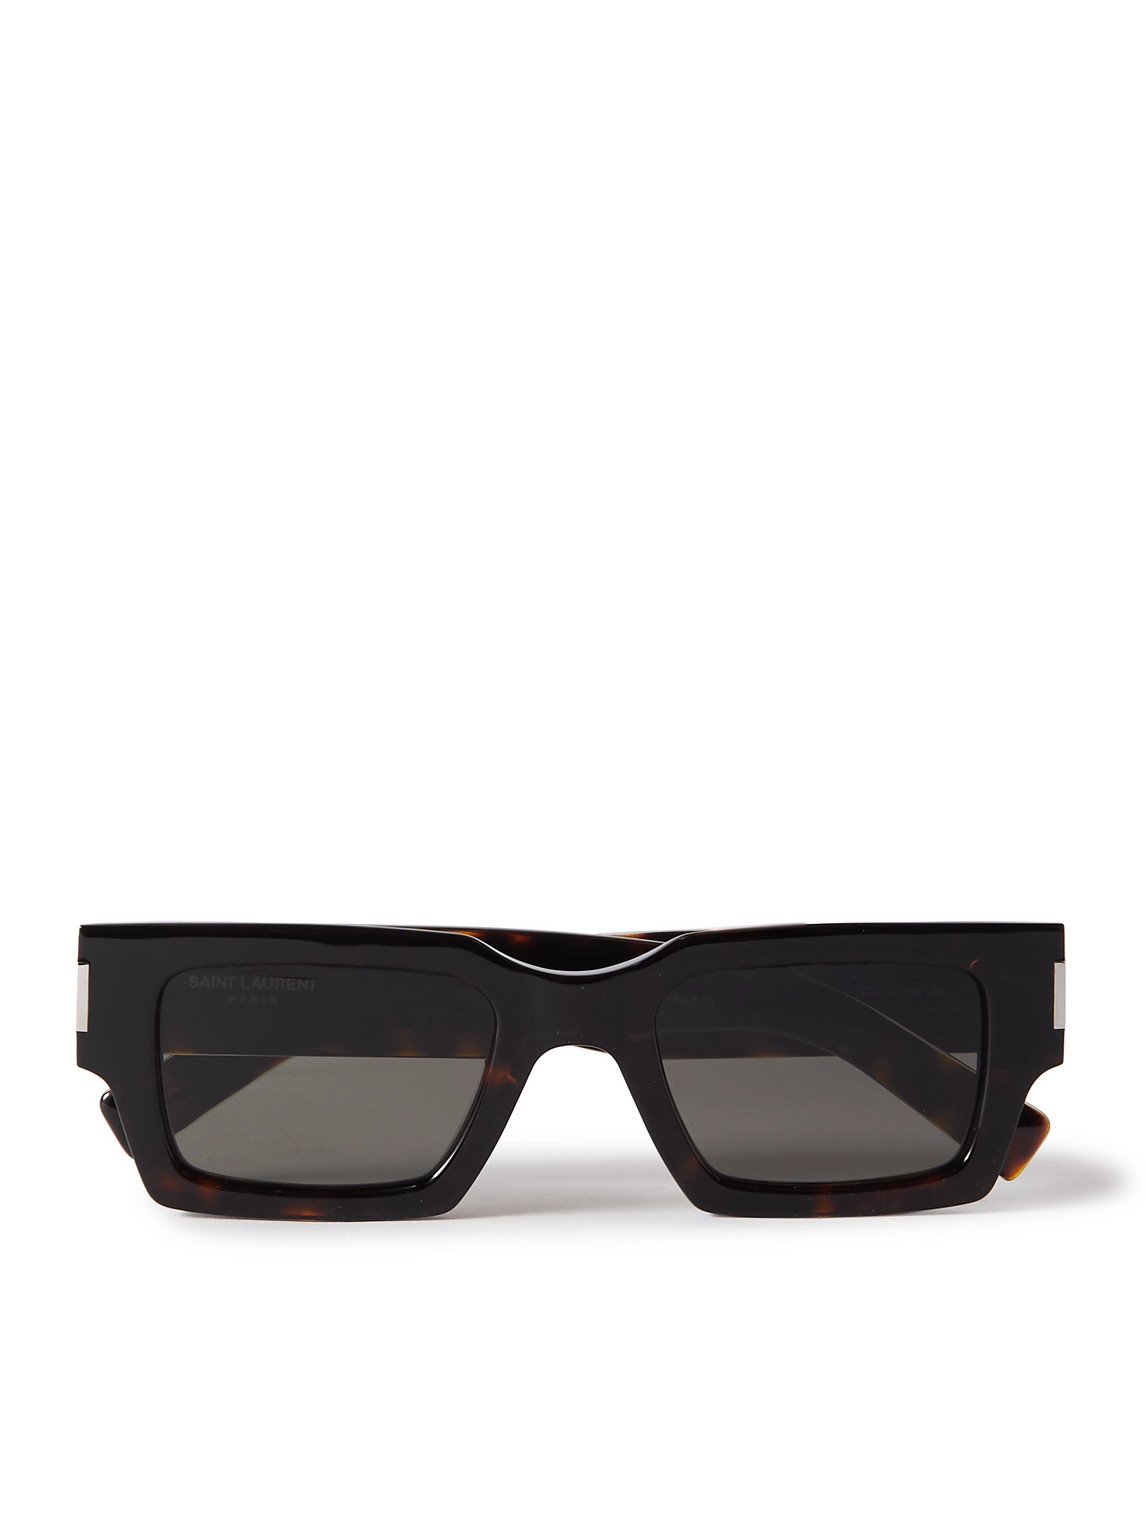 SAINT LAURENT - Square-Frame Tortoiseshell Acetate Sunglasses - Men - Tortoiseshell von SAINT LAURENT